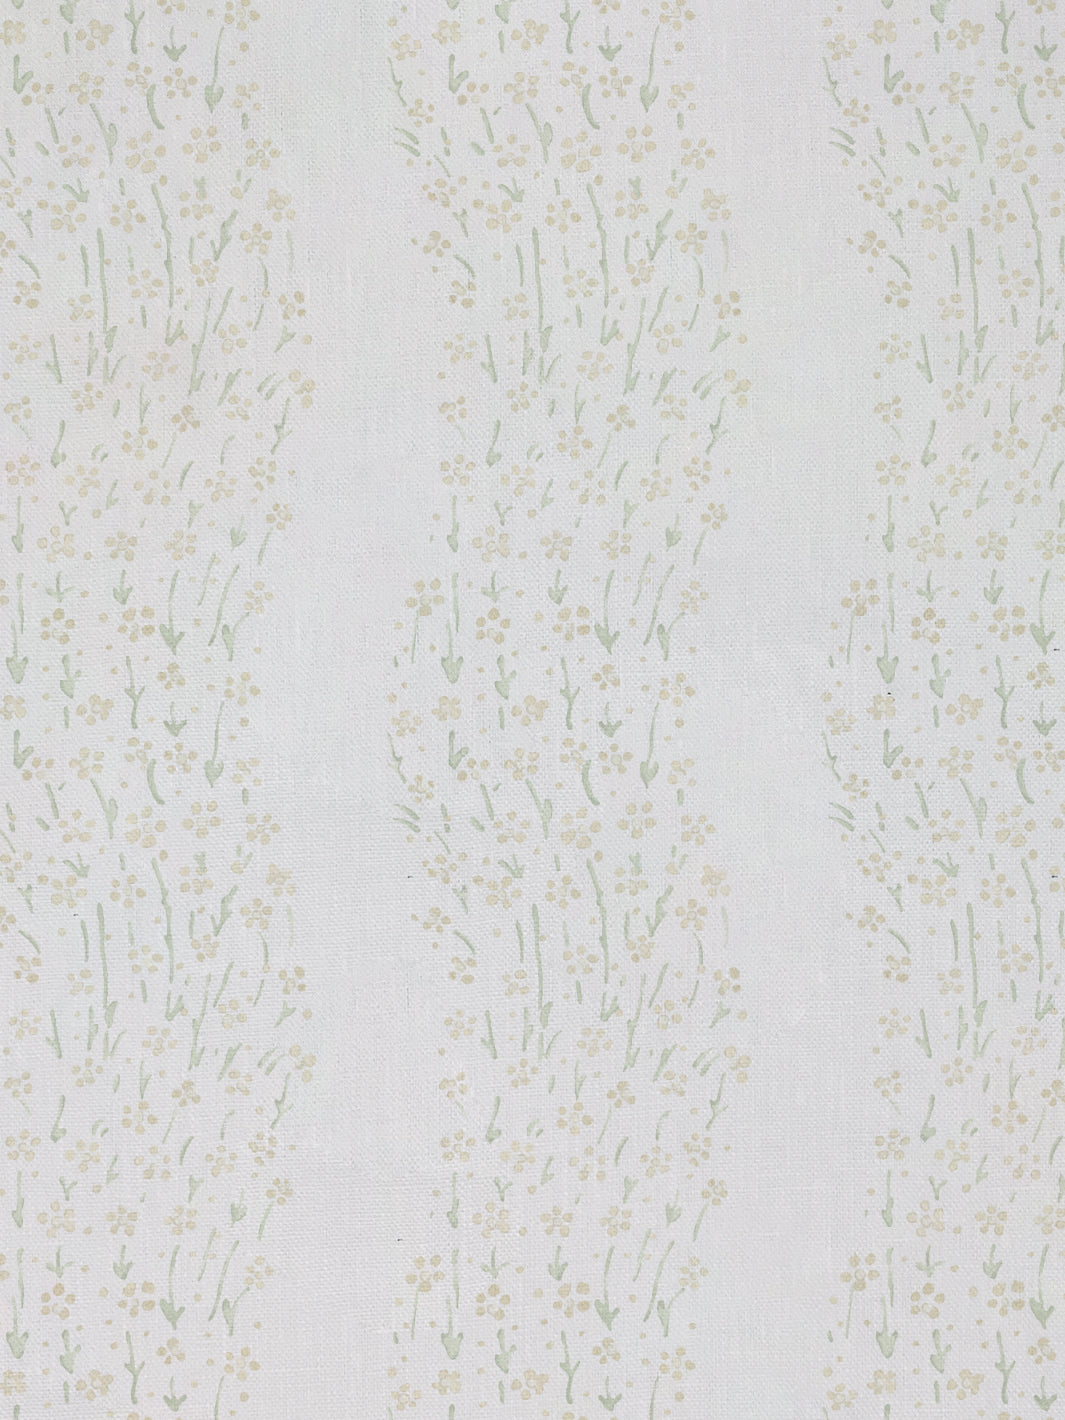 &#39;Hillhouse Floral Disty Wave&#39; Linen Fabric - Gold Green